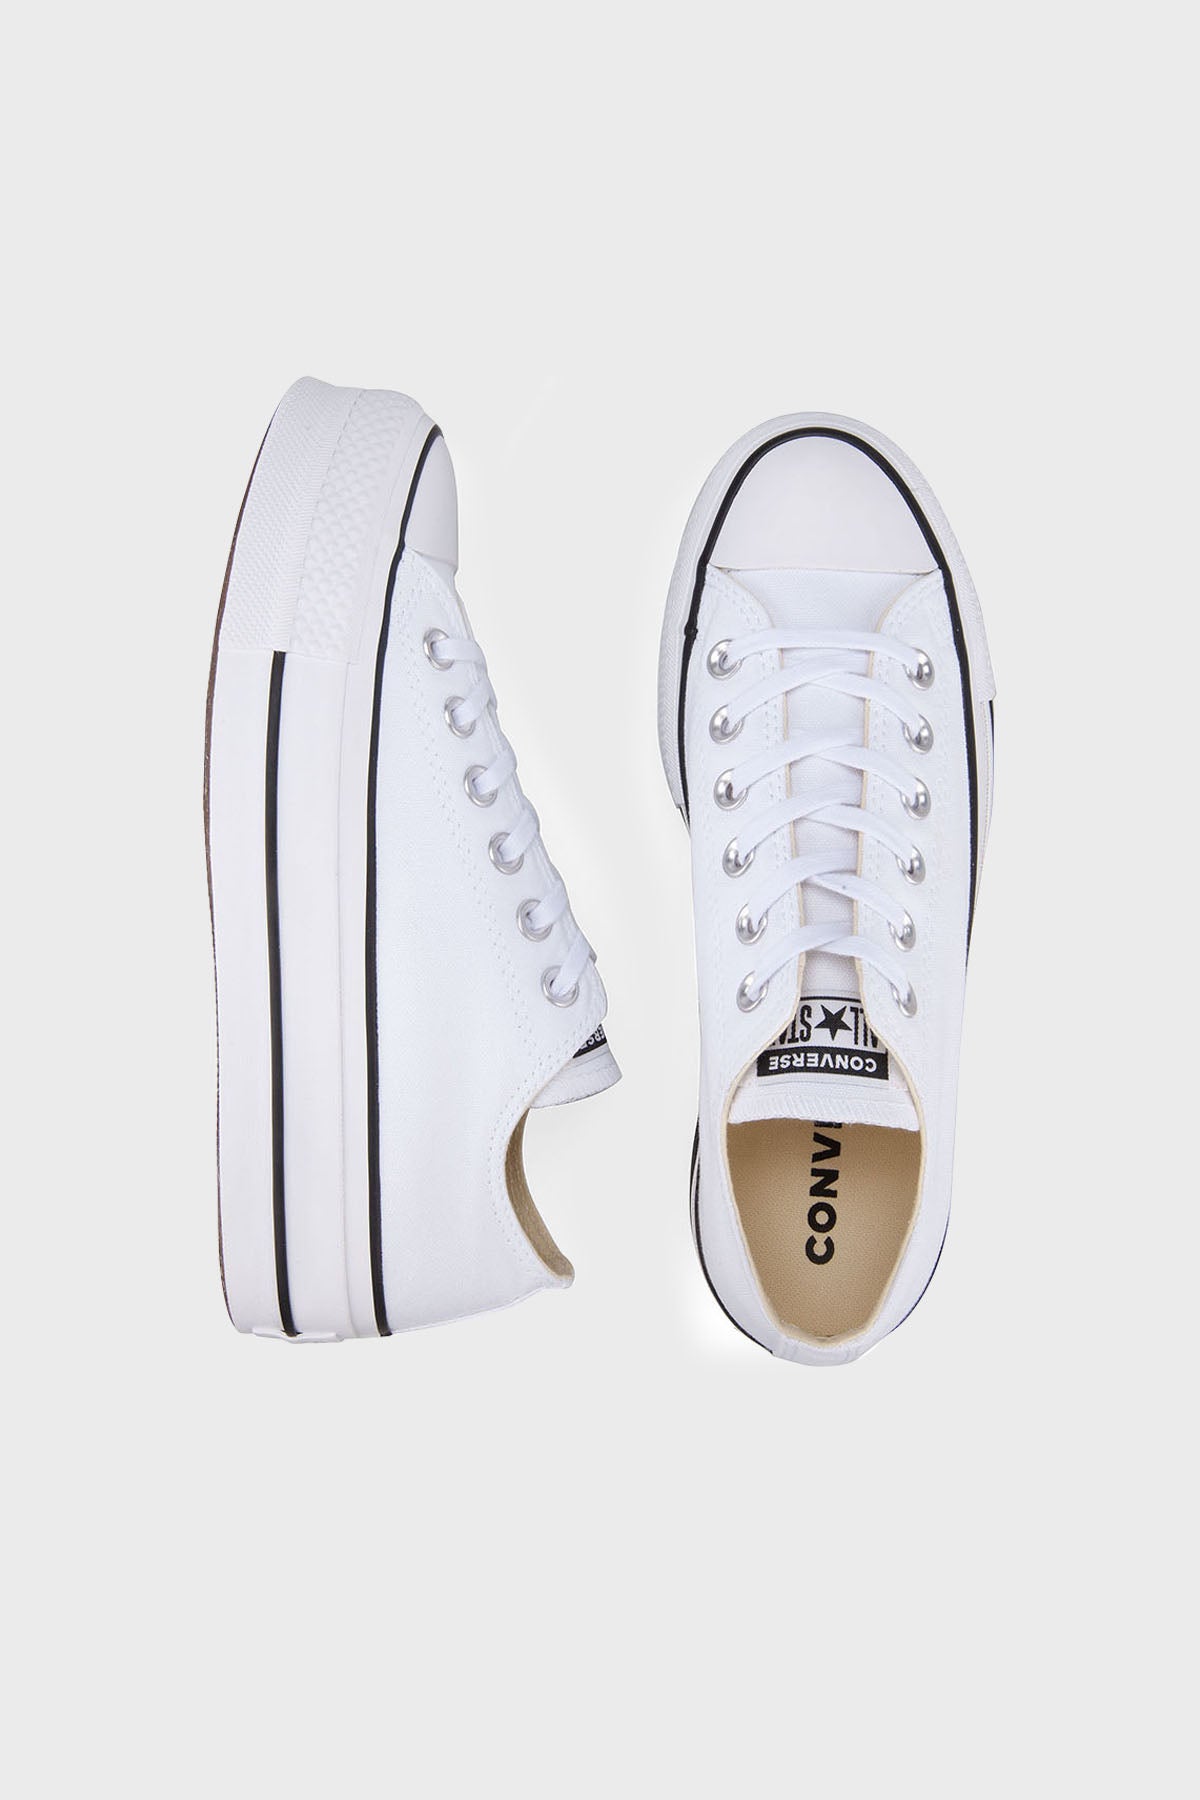 Converse Chuck Taylor Sneaker Bayan Ayakkabı 560251C 102 Beyaz-Siyah-Beyaz